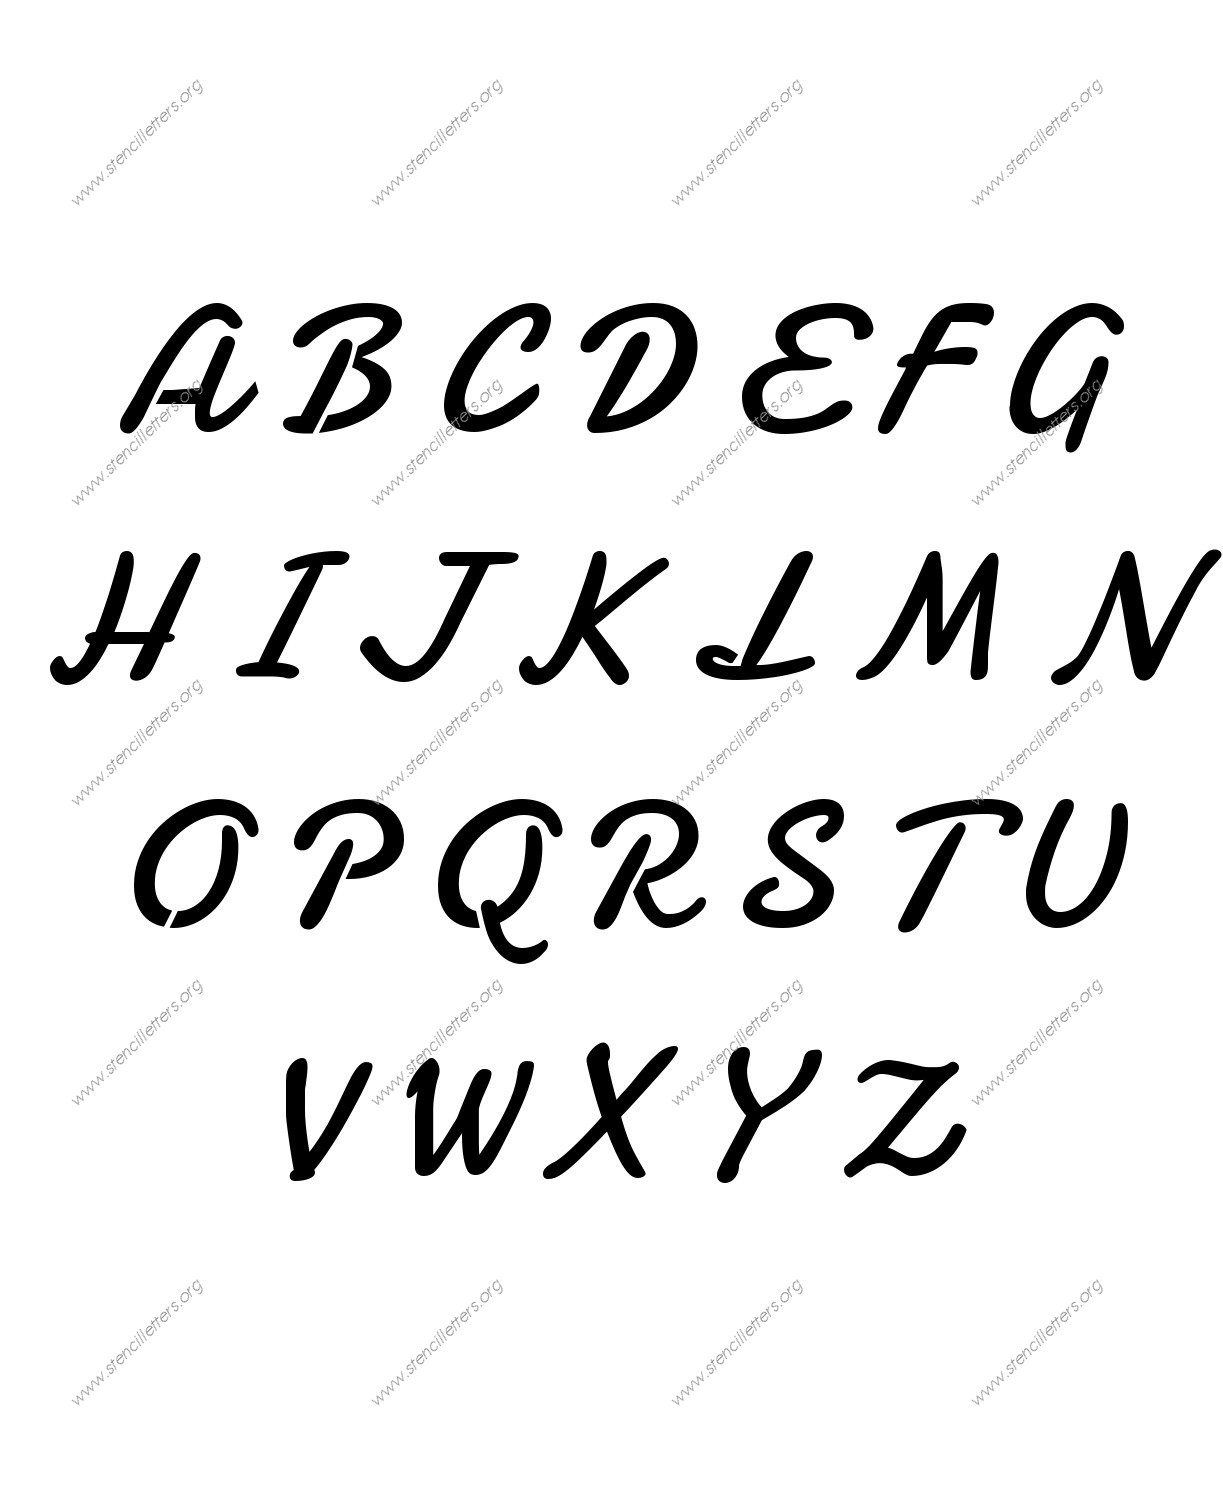 Display Script Cursive Custom Made to Order Stencil